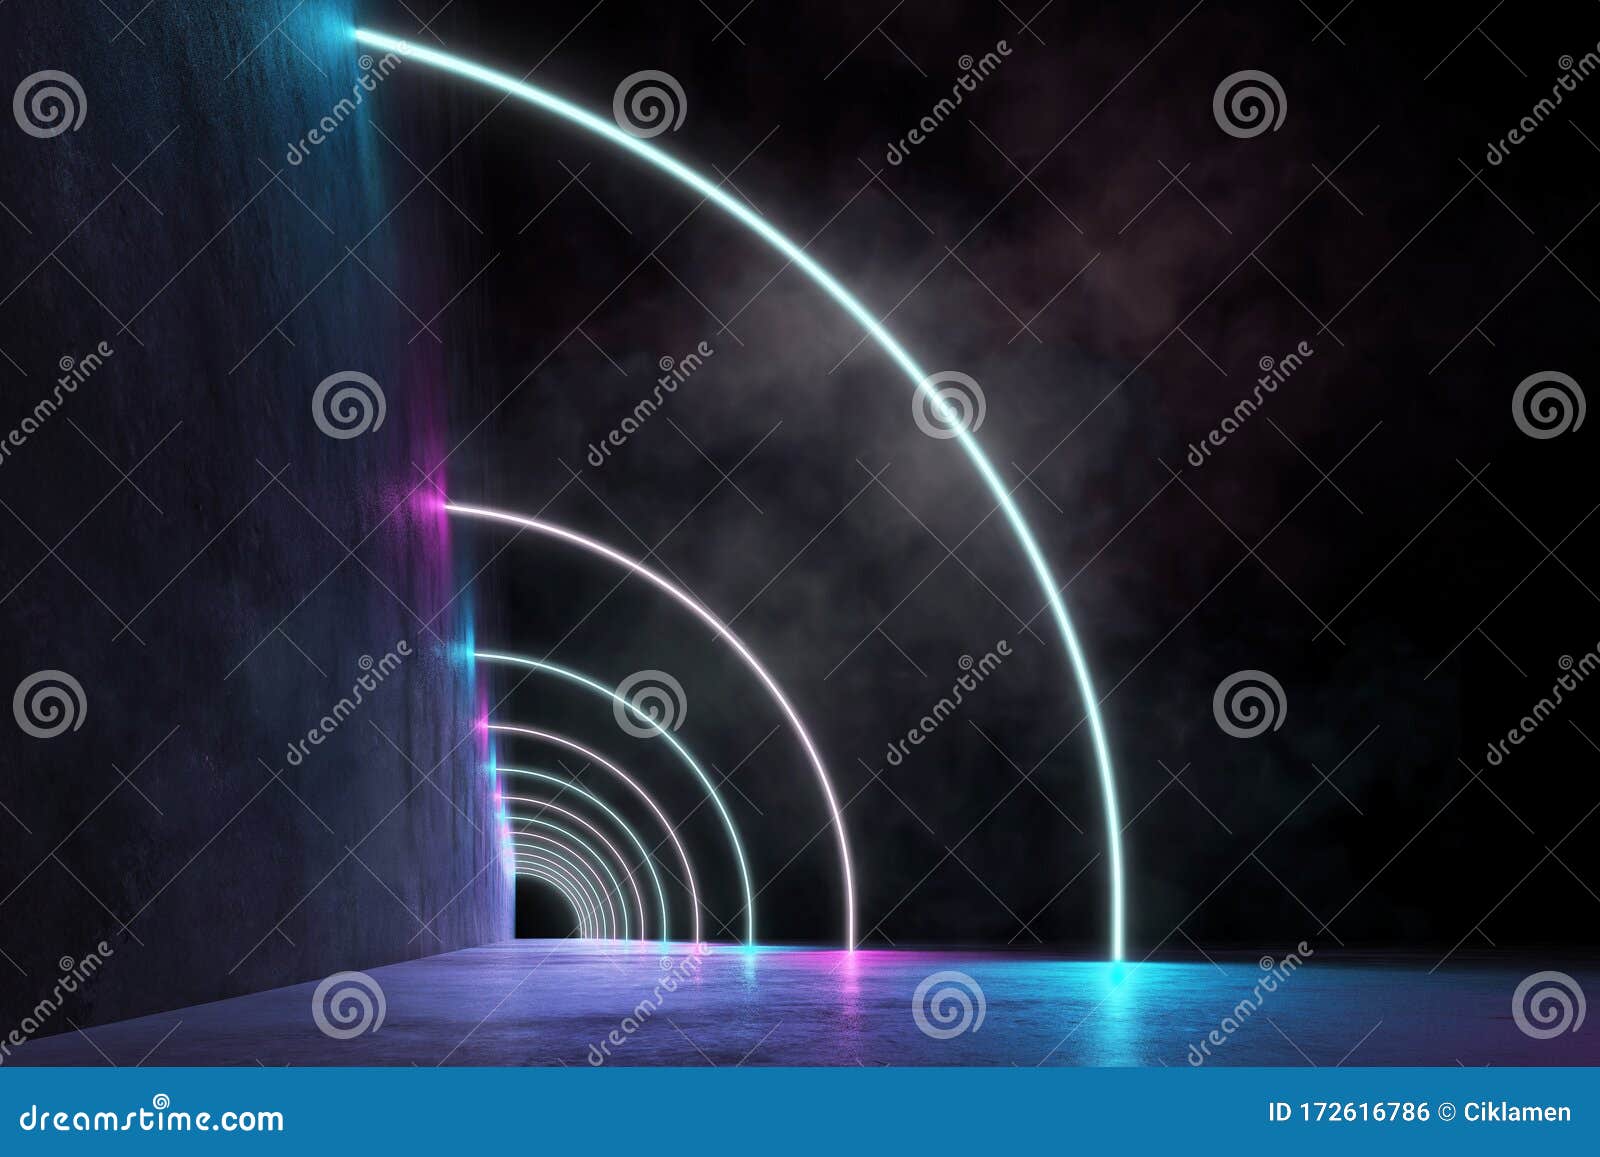 Neon Futuristic Arcs with Fluorescence and Smoke Stock Illustration ...